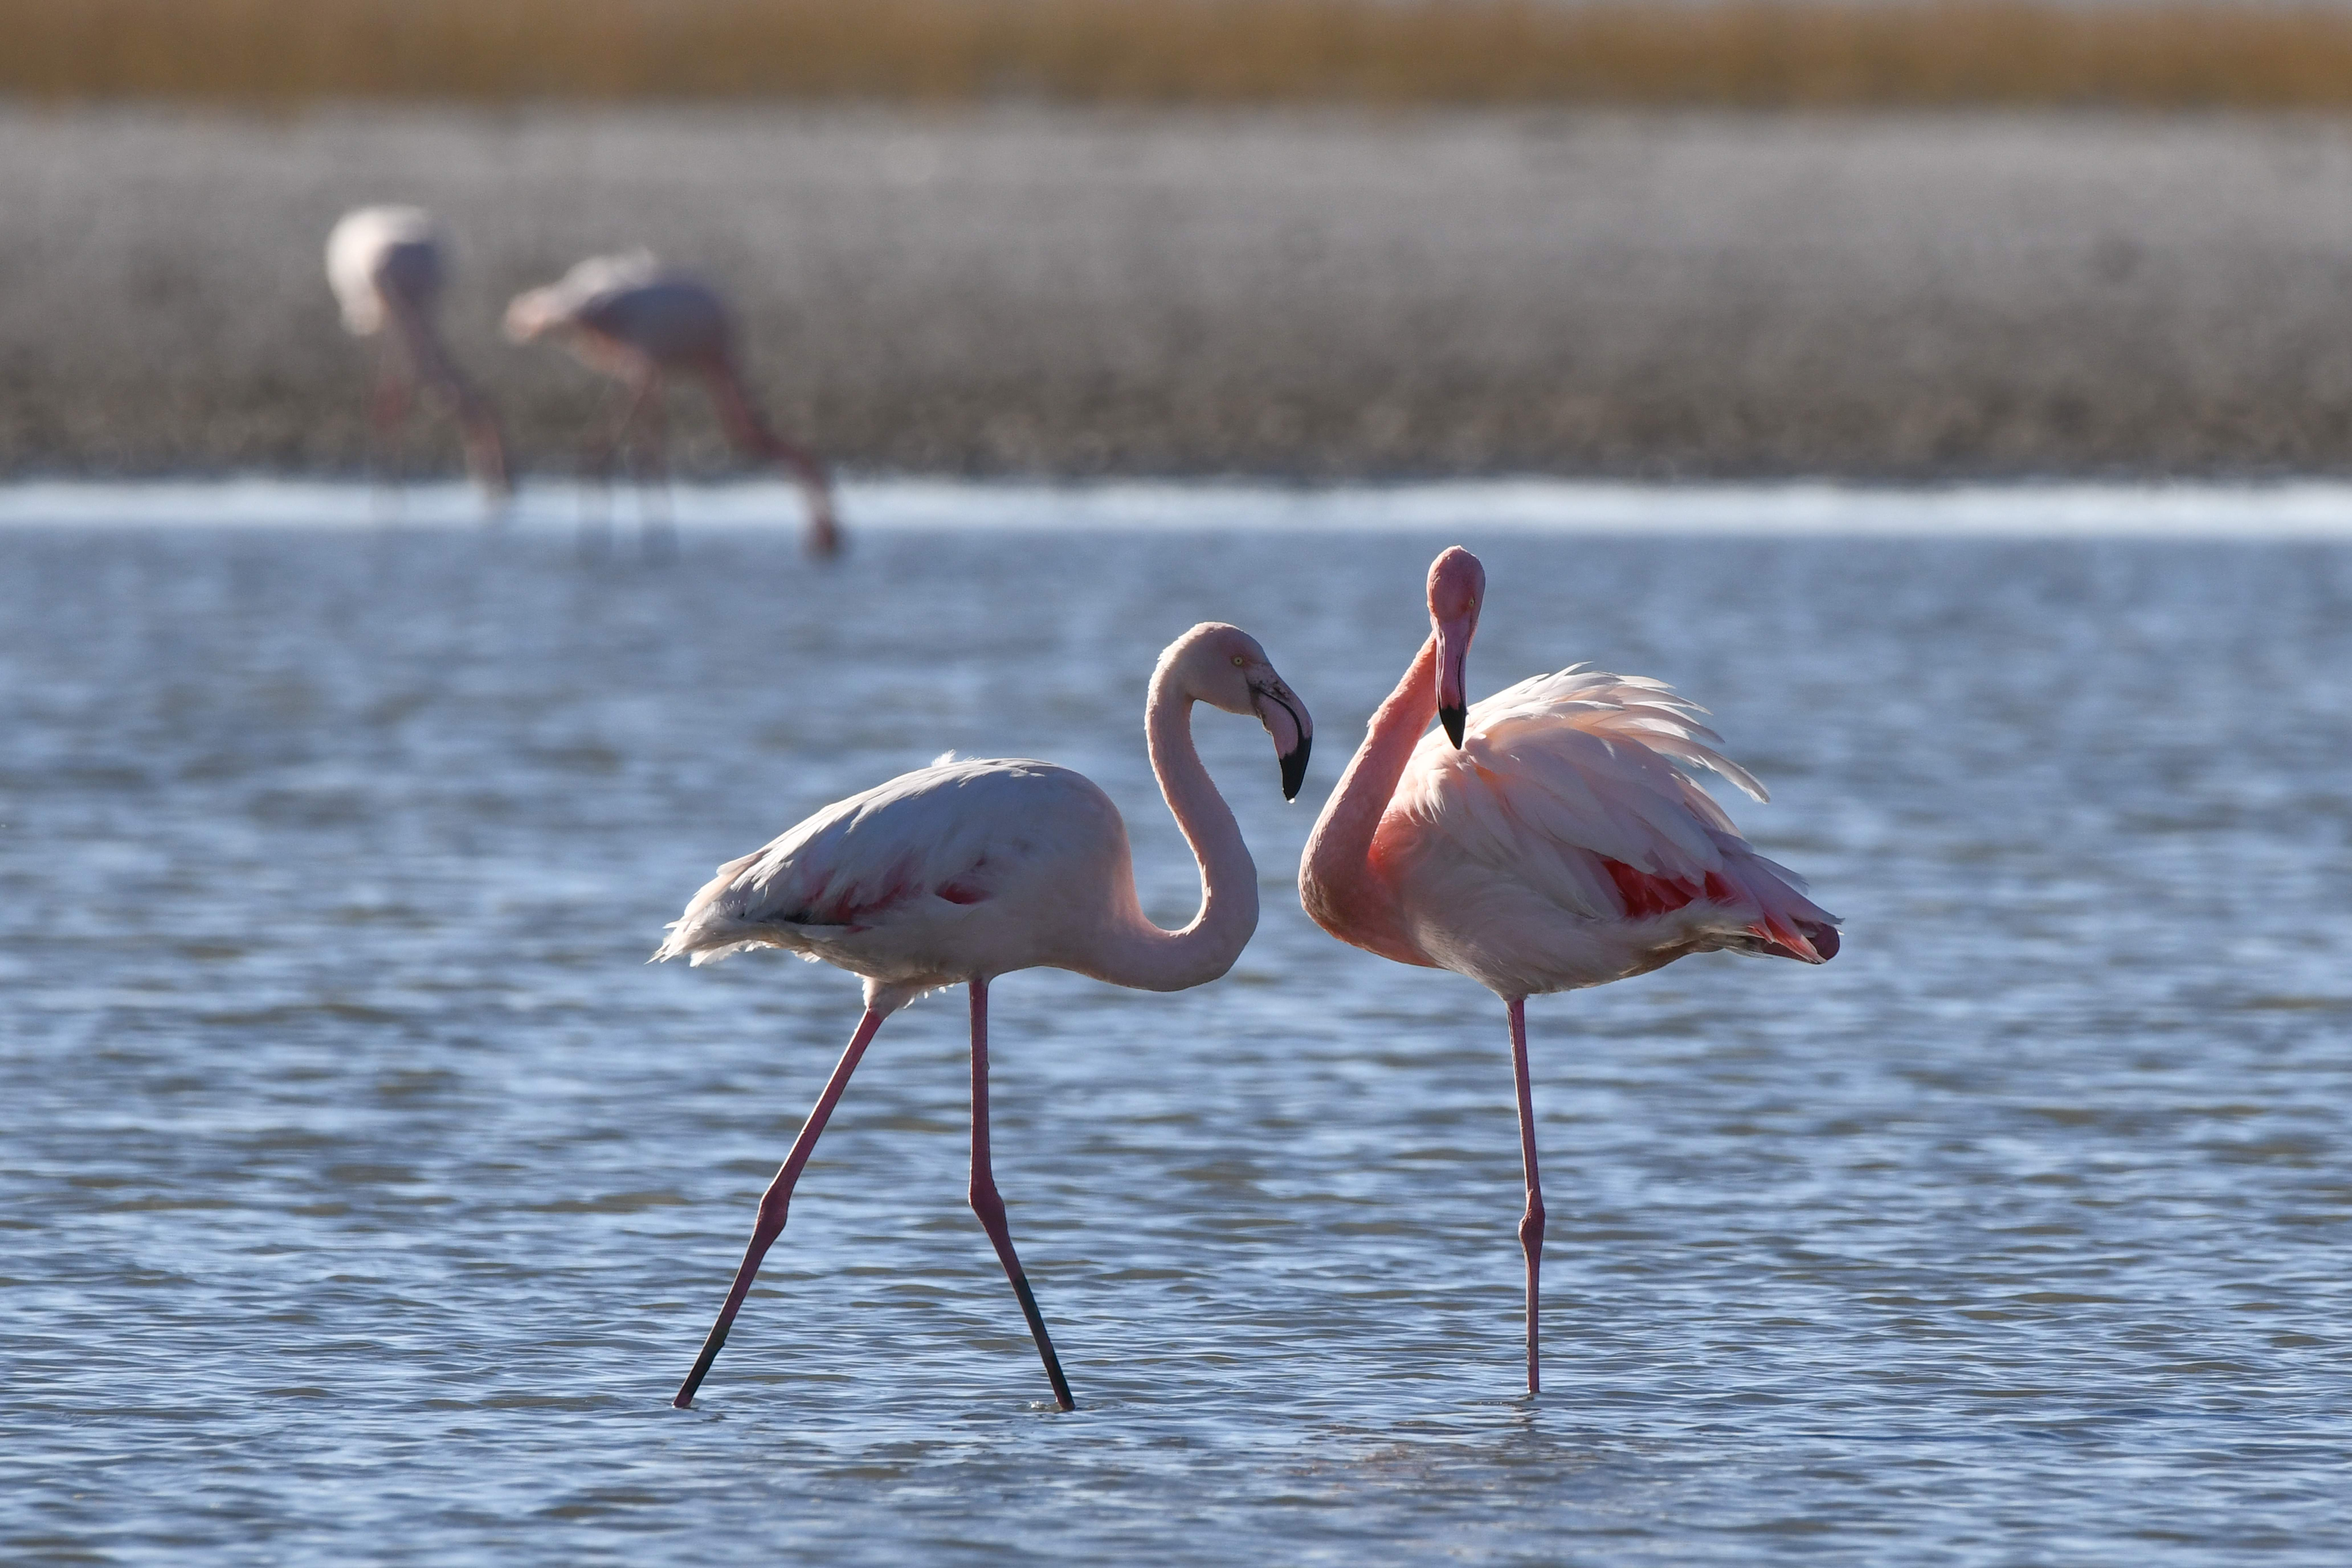 van-golunun-alli-turnalari-flamingolar-goc-etmedi_4358_dhaphoto2